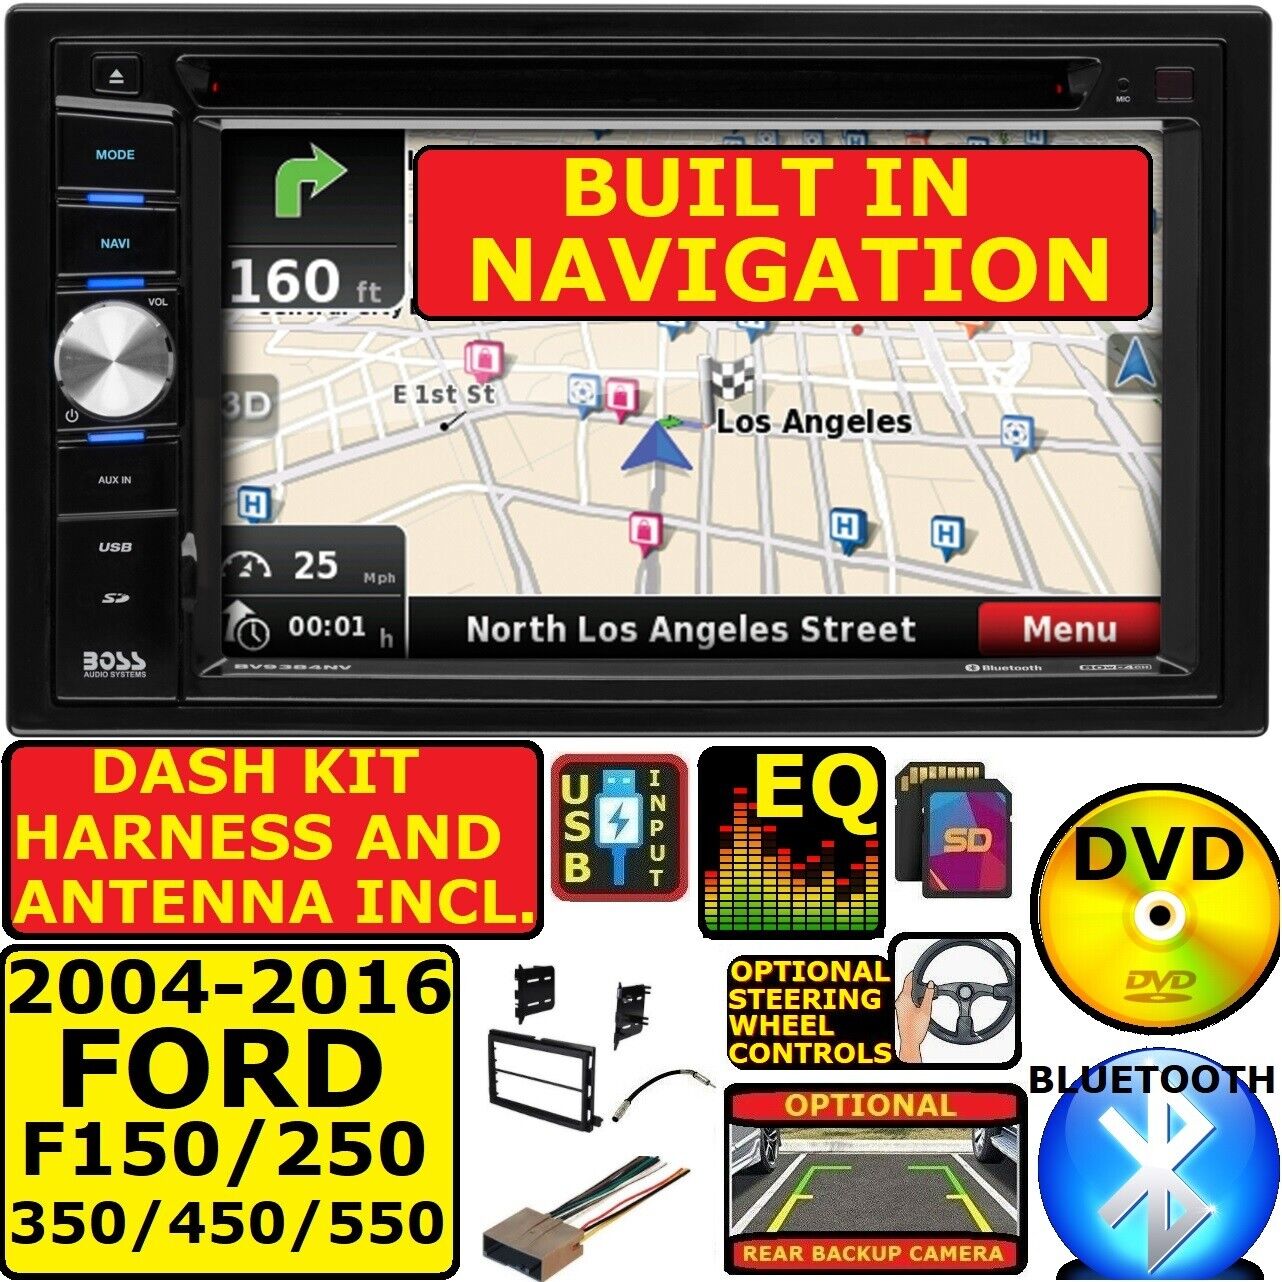   2004-2016 FORD F250/350/450/550 BLUETOOTH DVD CAR Stereo GPS NAVIGATION SYSTEM